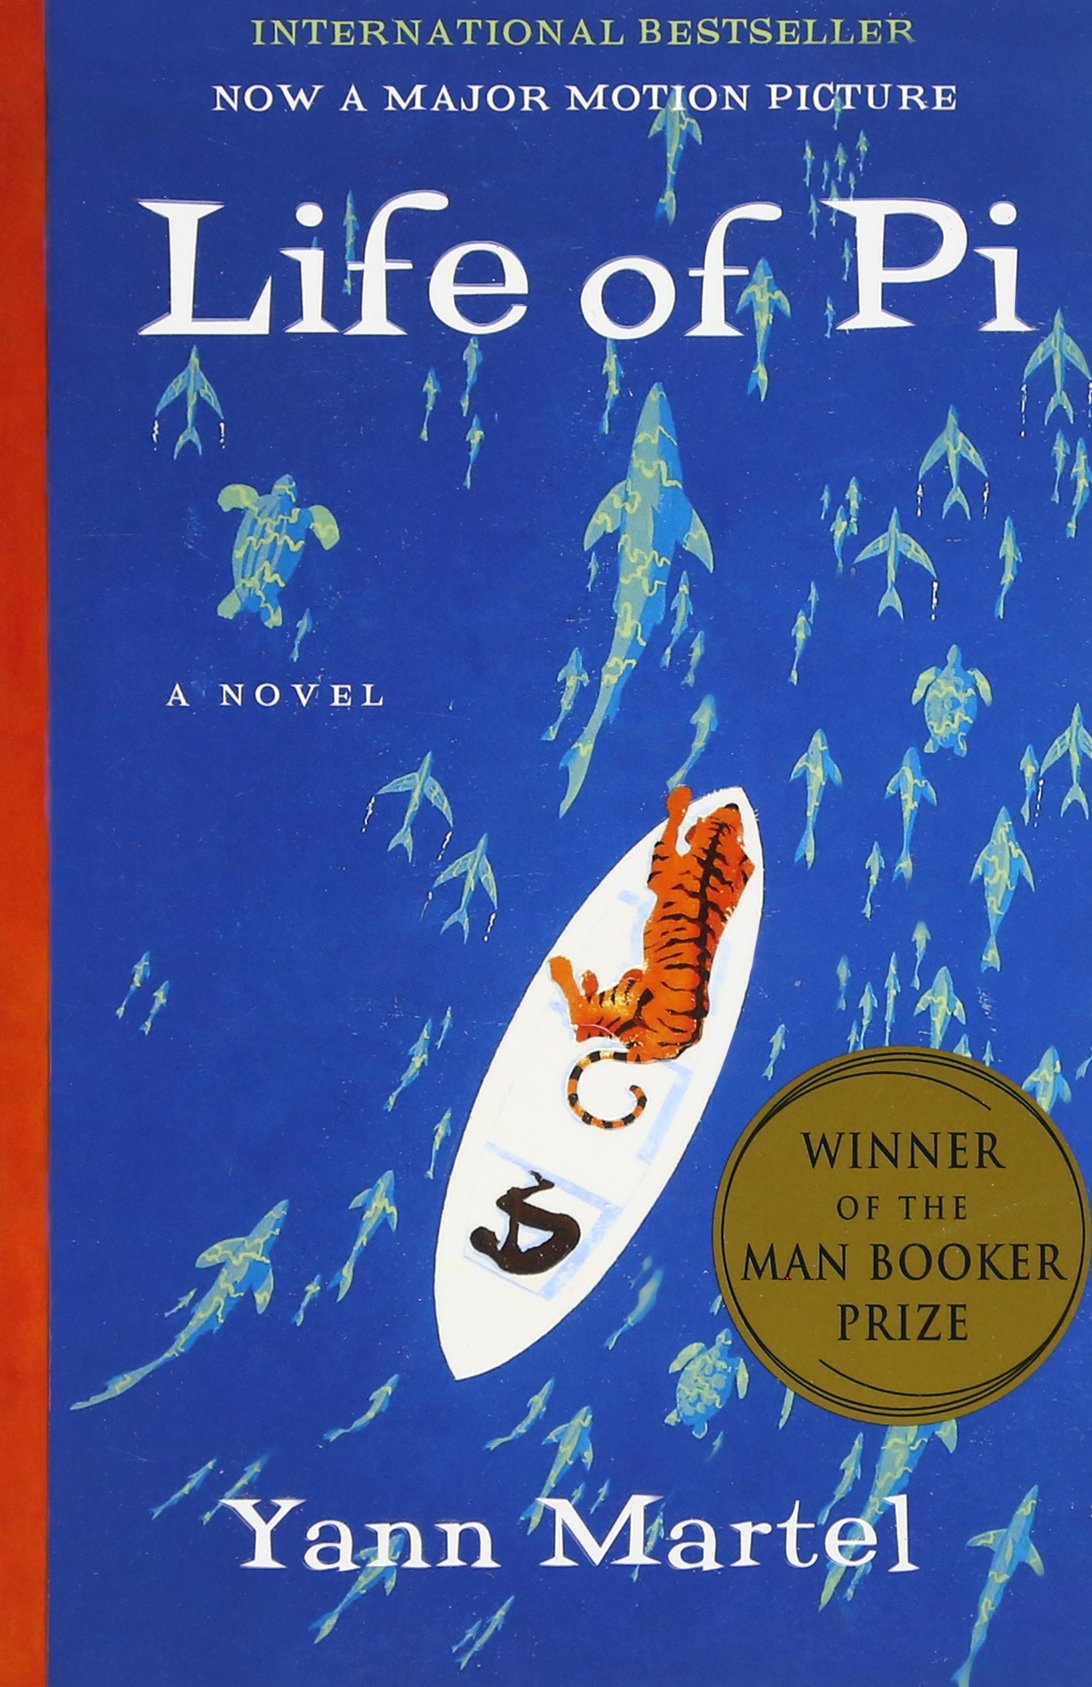 A fantasy adventure novel by Yann Martel: Life of Pi audiobook